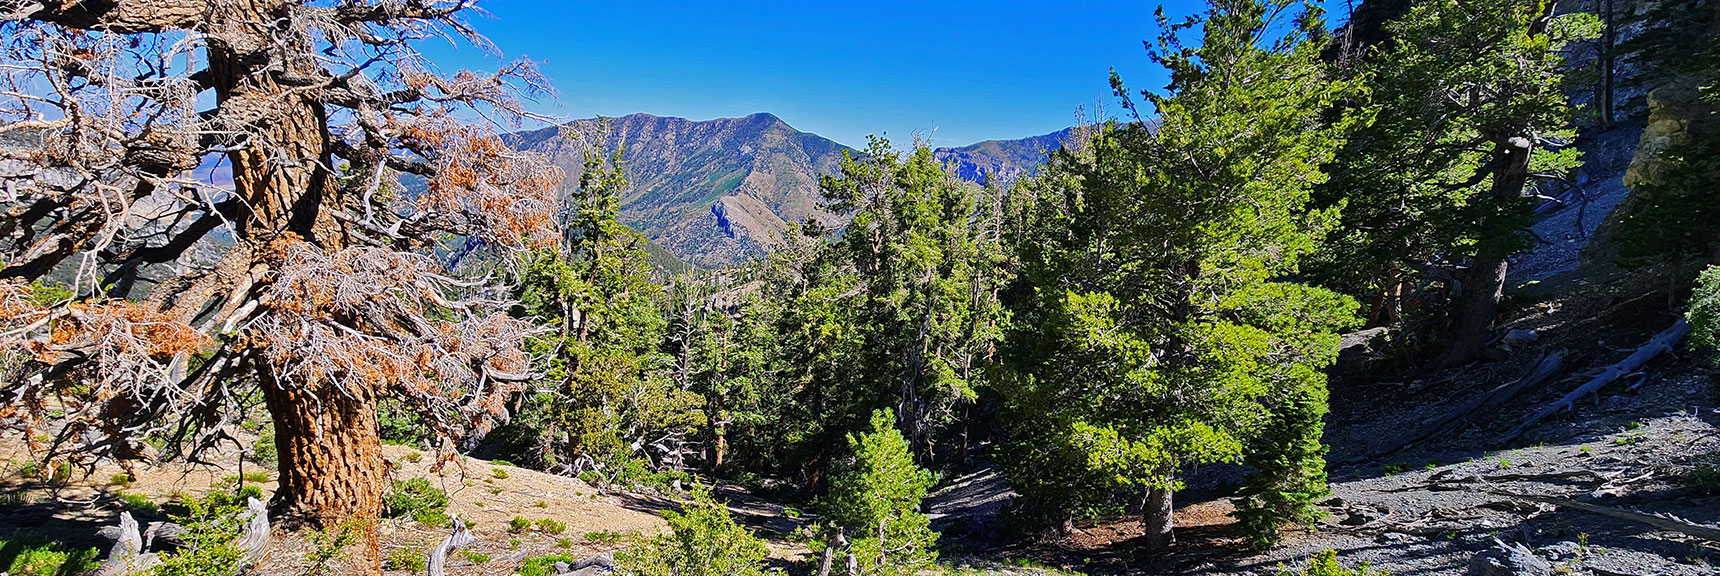 Harris Mt. and West Approach Ridge Are Good Landmarks to Aim For. | Fletcher Canyon / Fletcher Peak / Cockscomb Ridge Circuit | Mt. Charleston Wilderness | Spring Mountains, Nevada